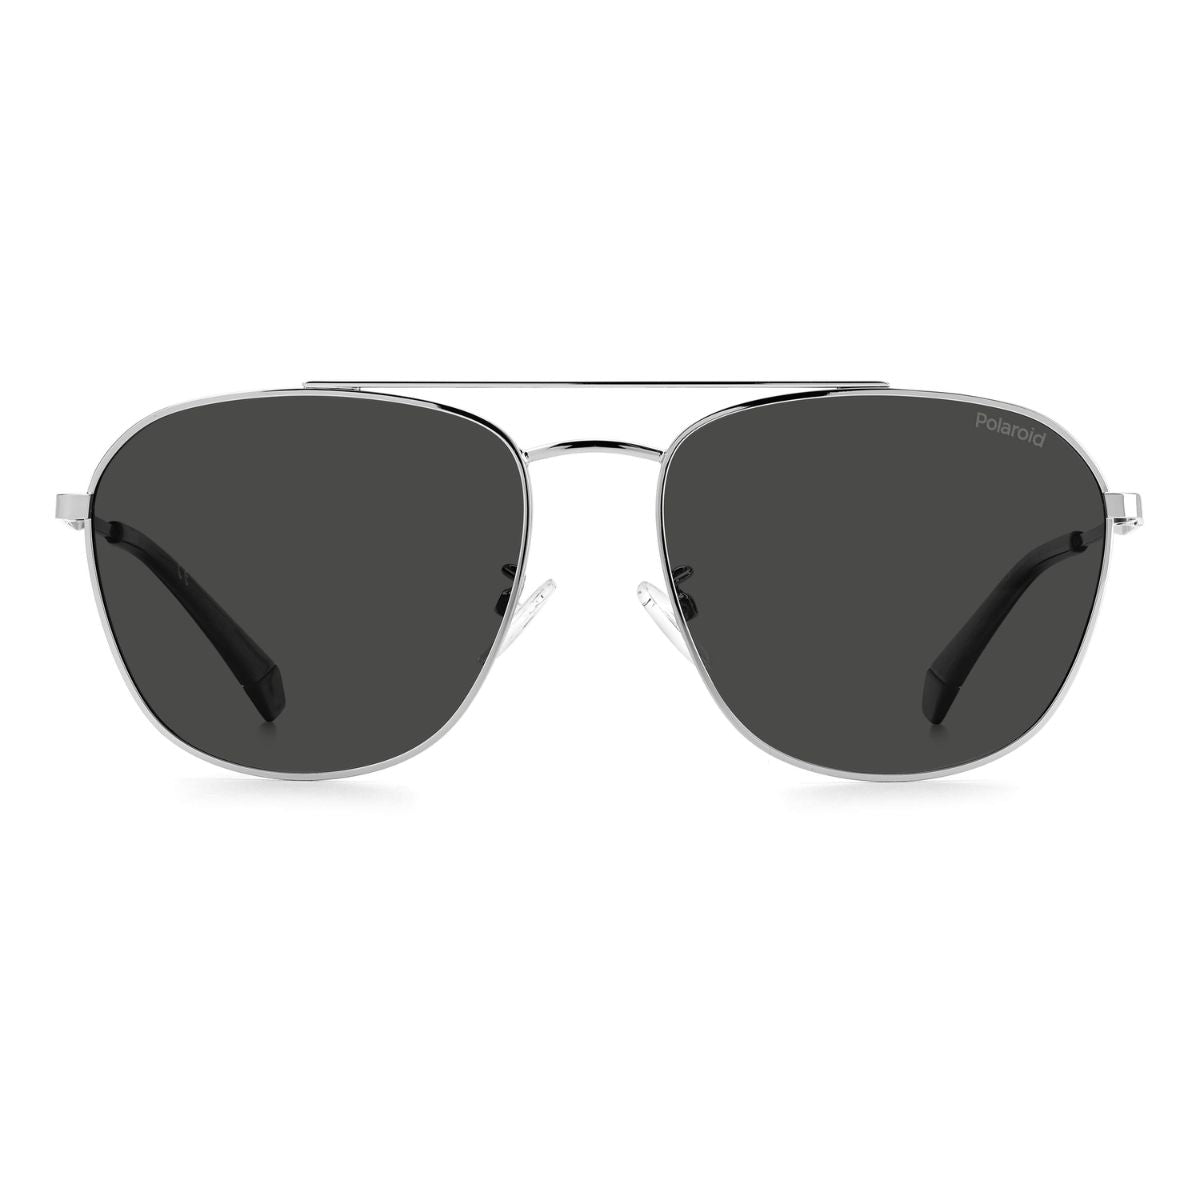 "Shop Branded Polaroid 4127 Polarized Sunglasses For Mens"